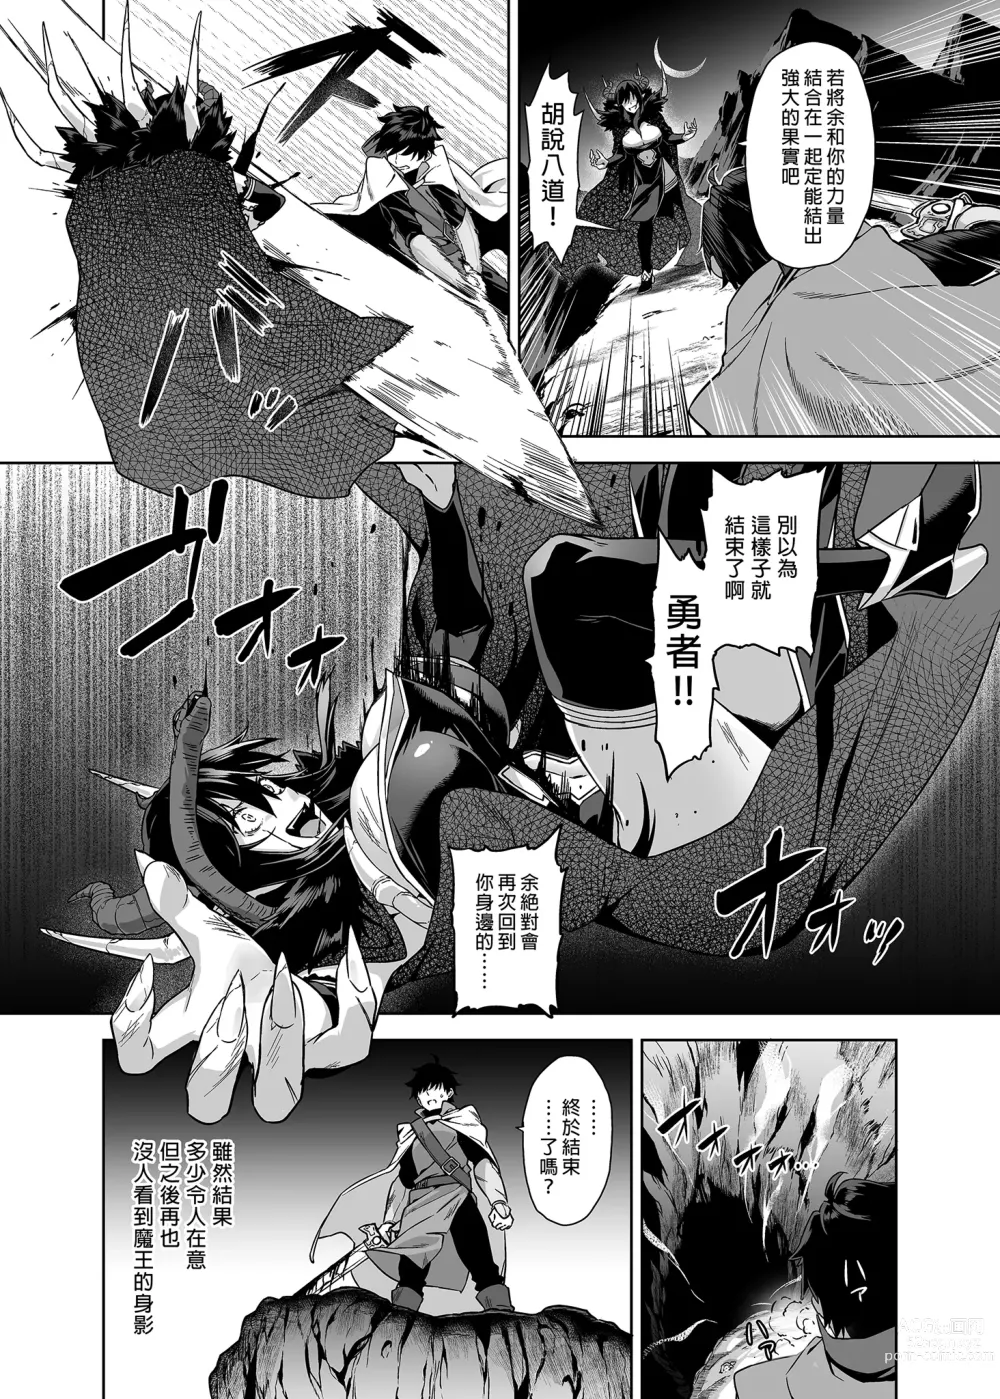 Page 4 of manga 押しかけ魔王と強淫なまハメ生活+後日談